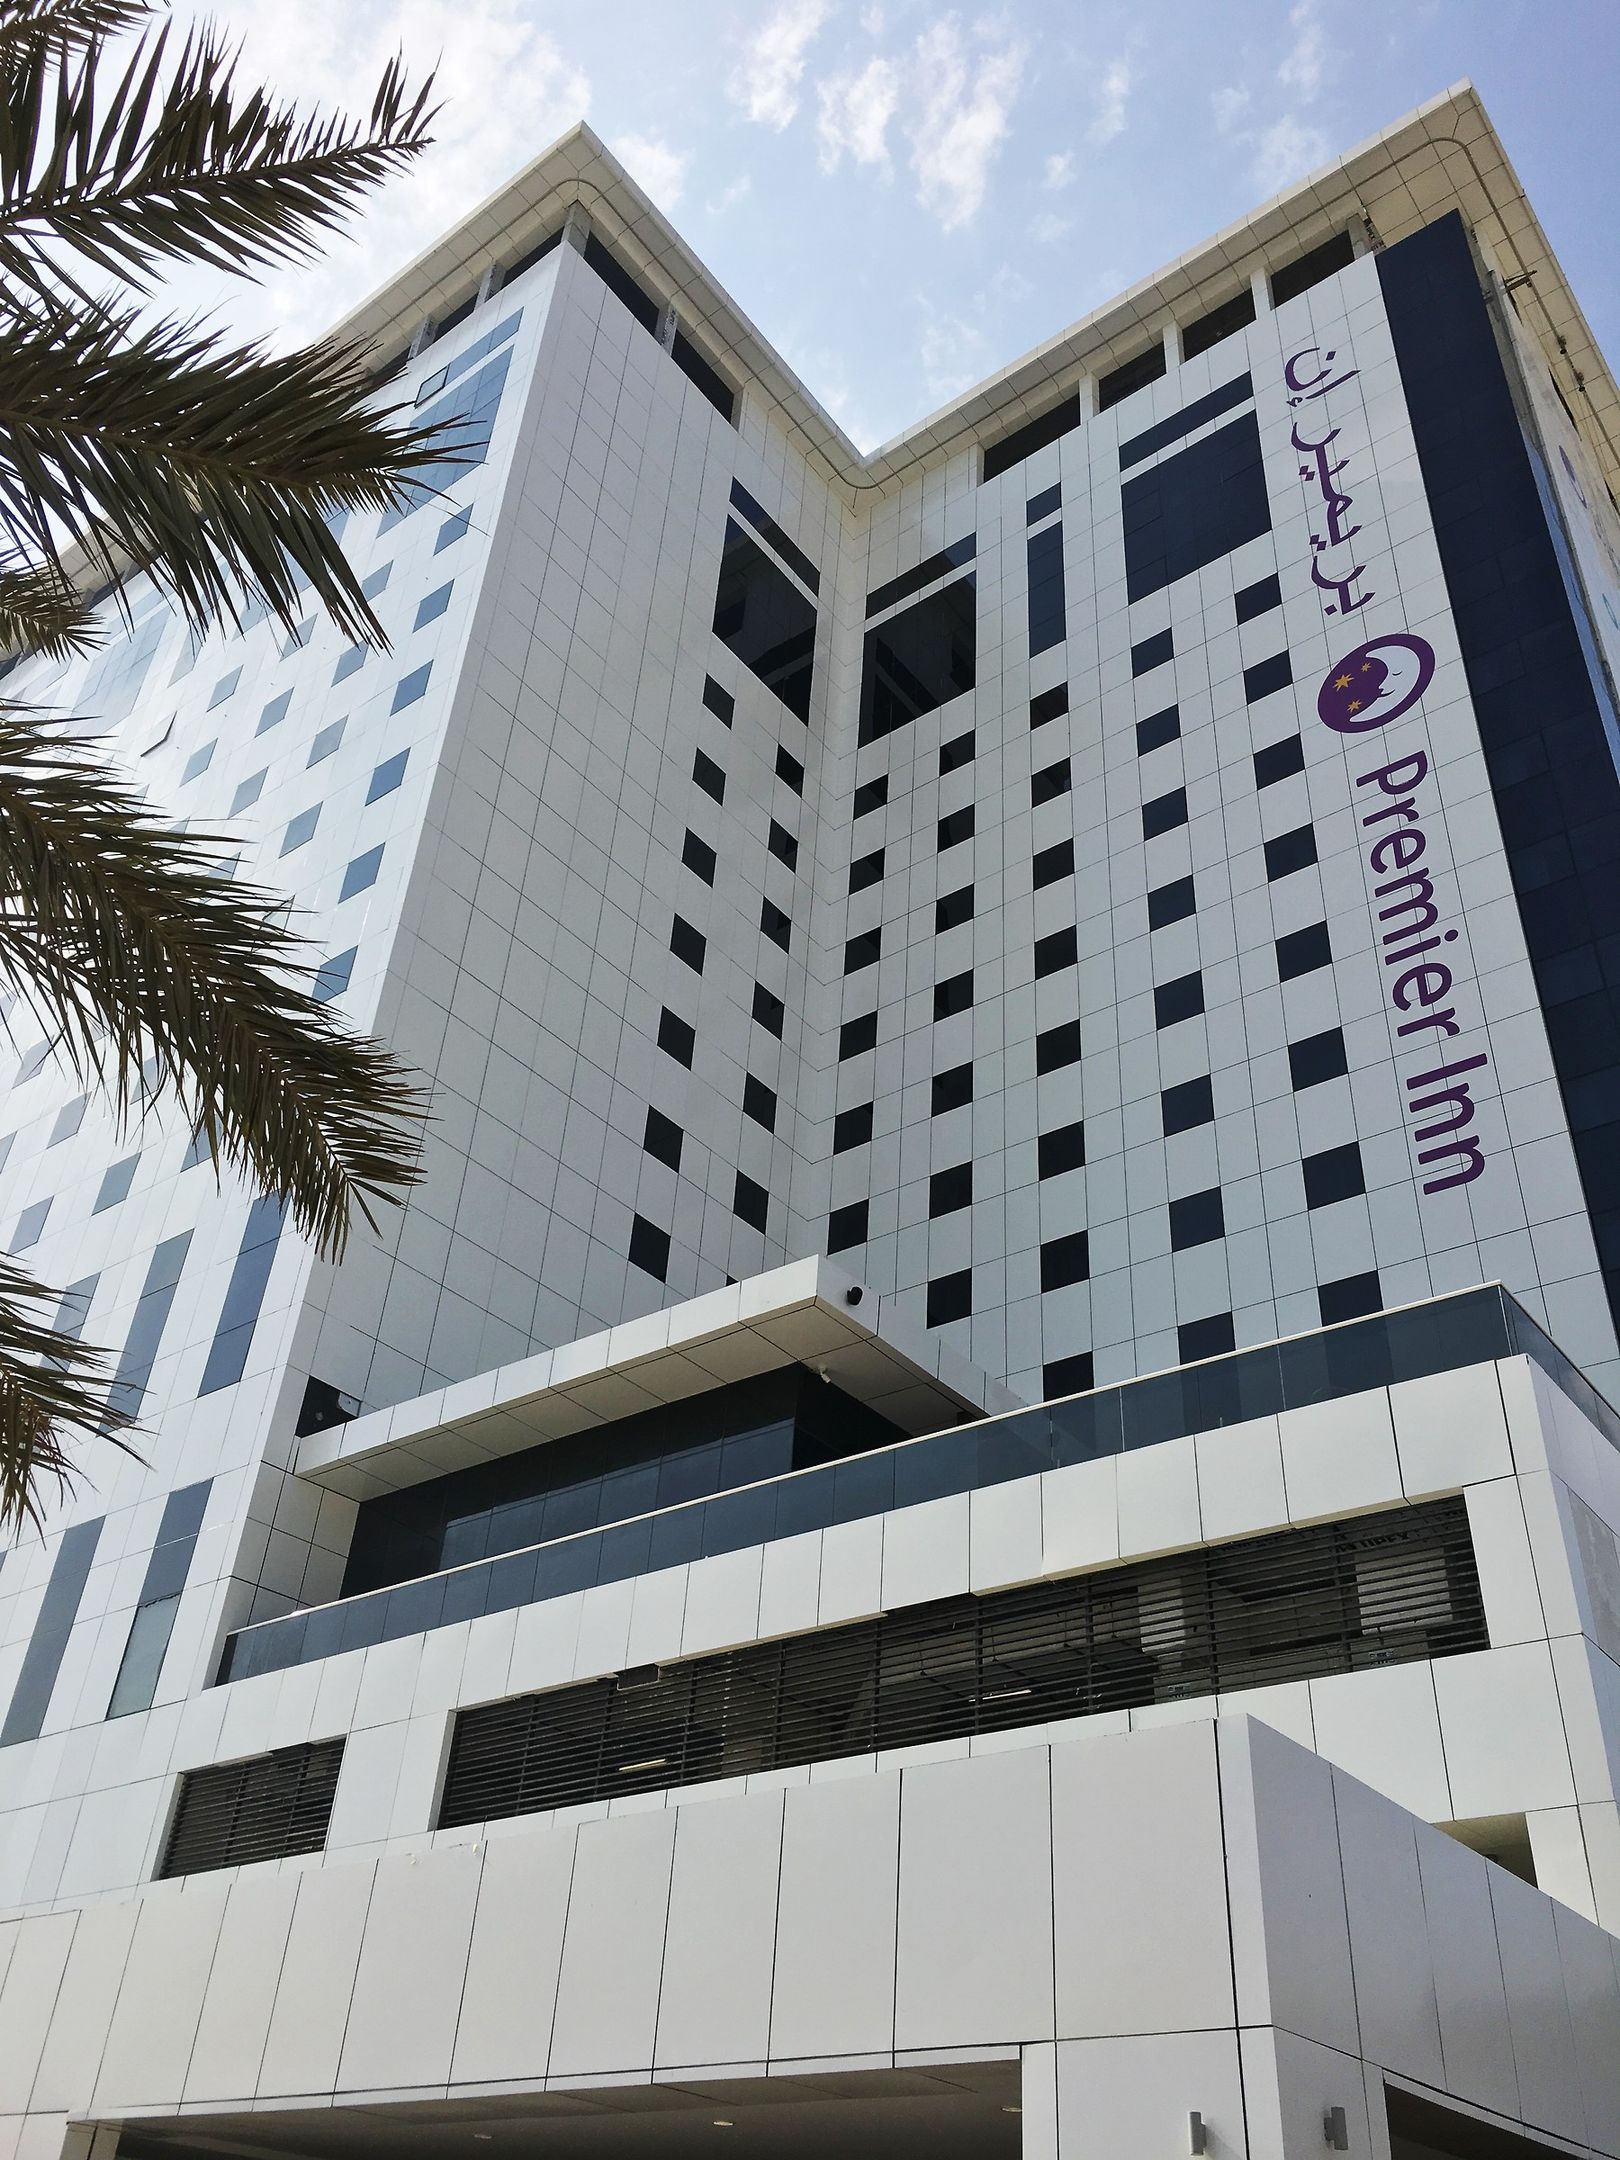 Premier Inn Dubai Ibn Battuta Mall Hotel